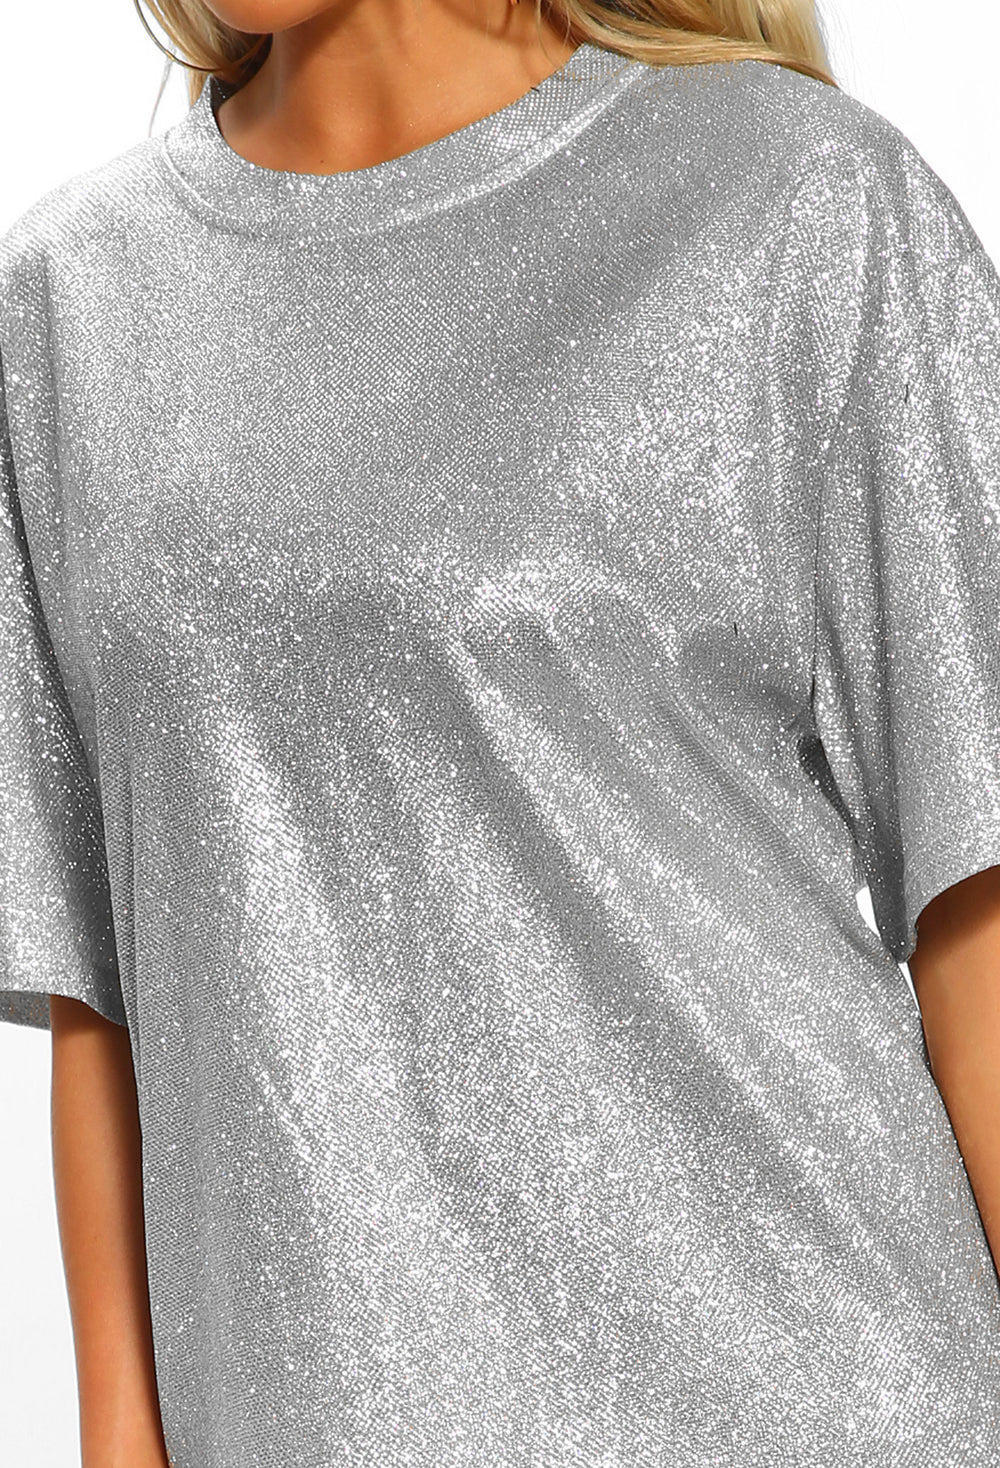 glitter oversized t shirt dress